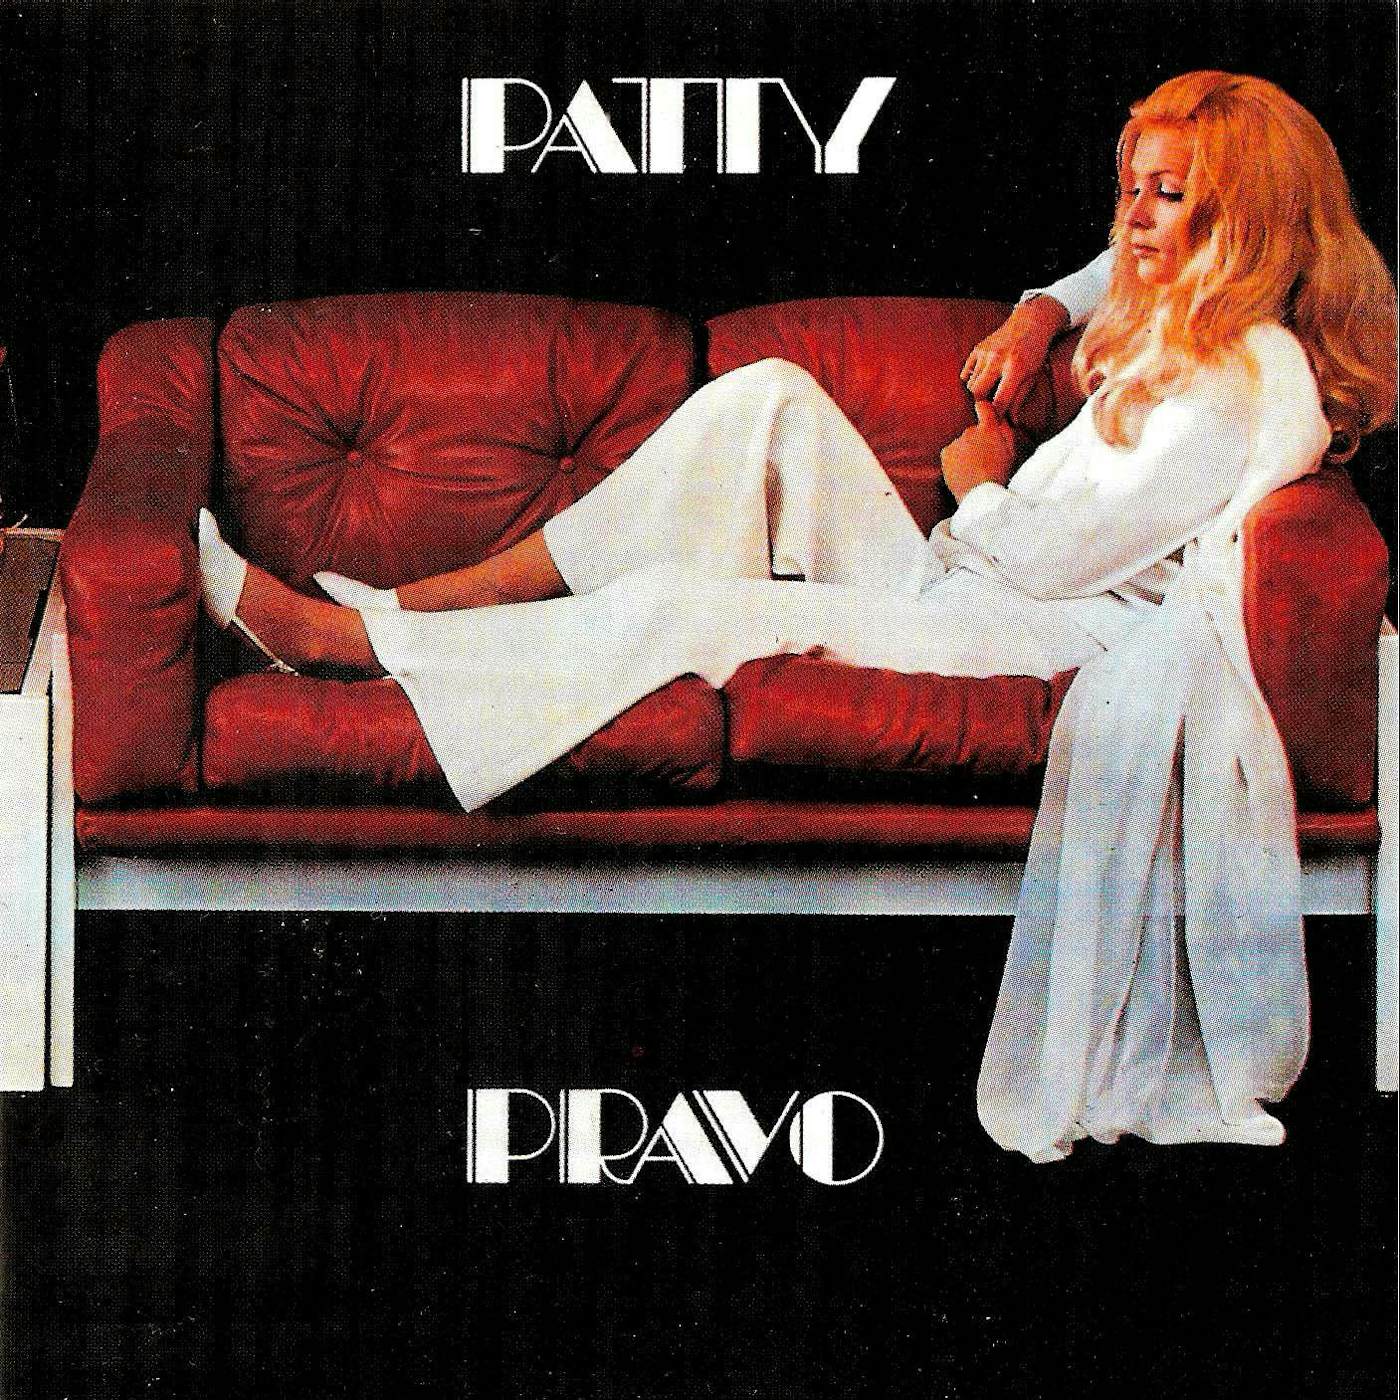 Patty Pravo Vinyl Record